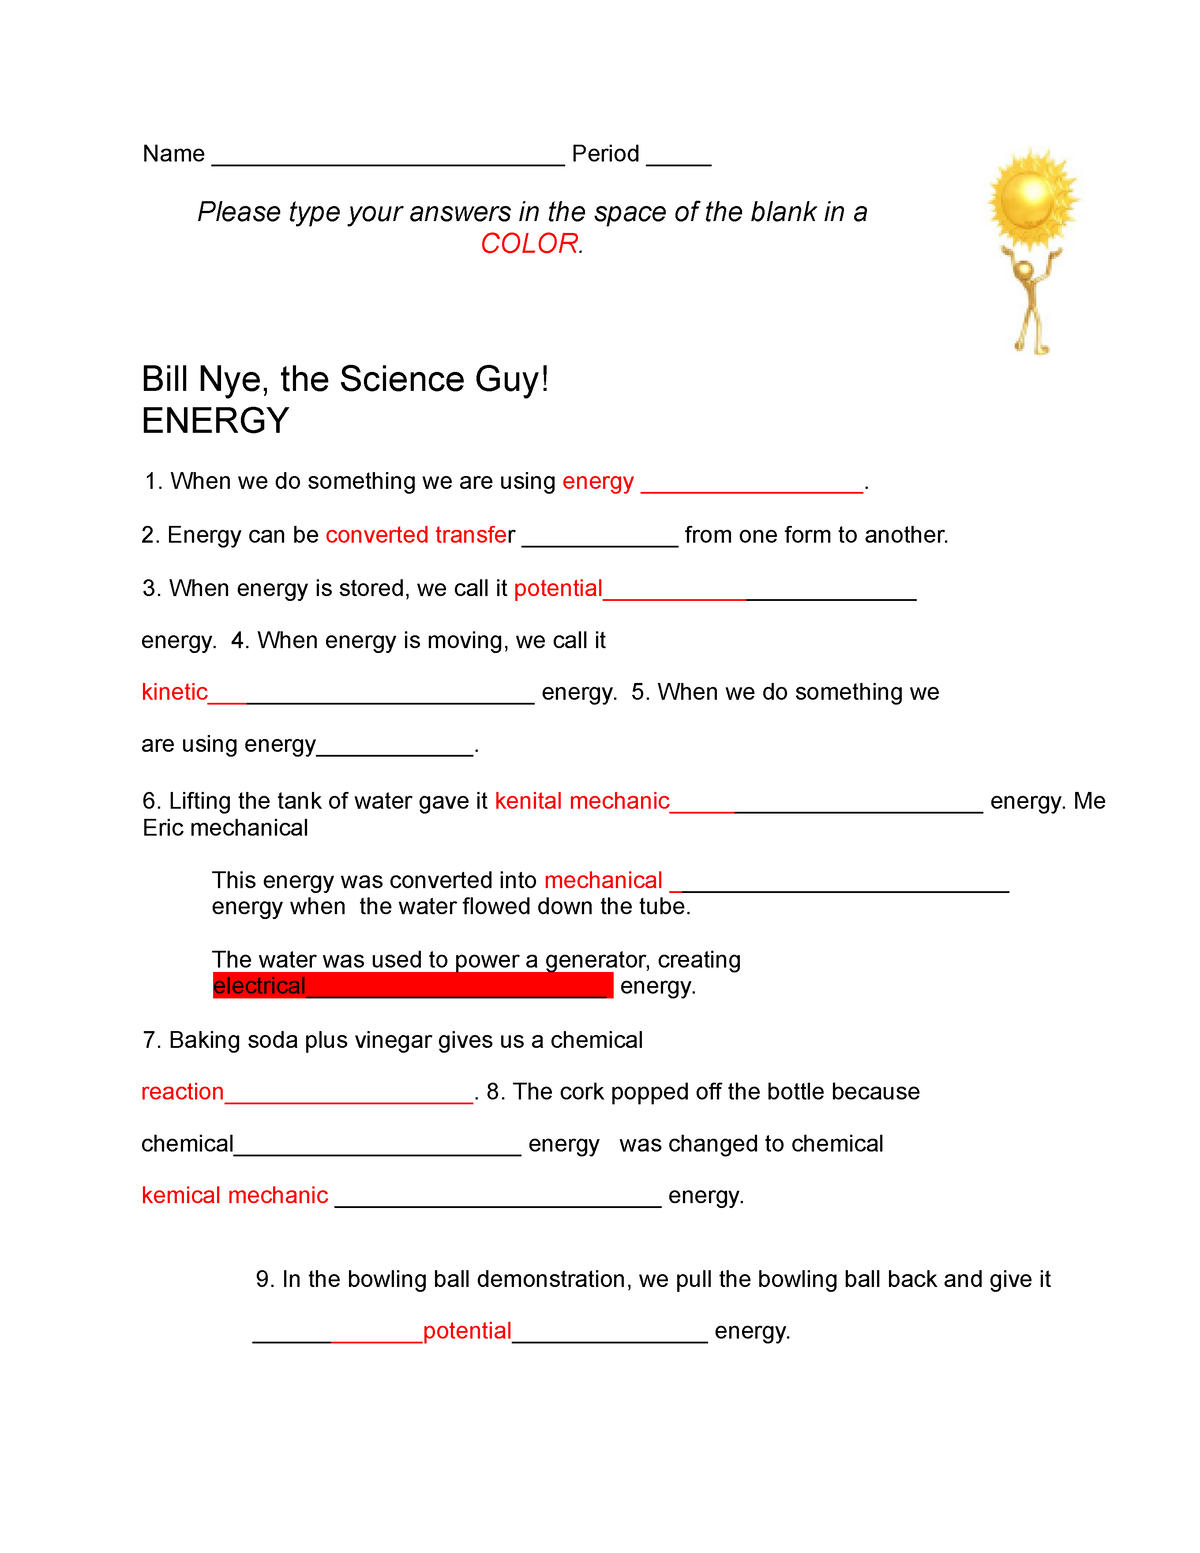 Bill Nye Energy Worksheet student docx Name